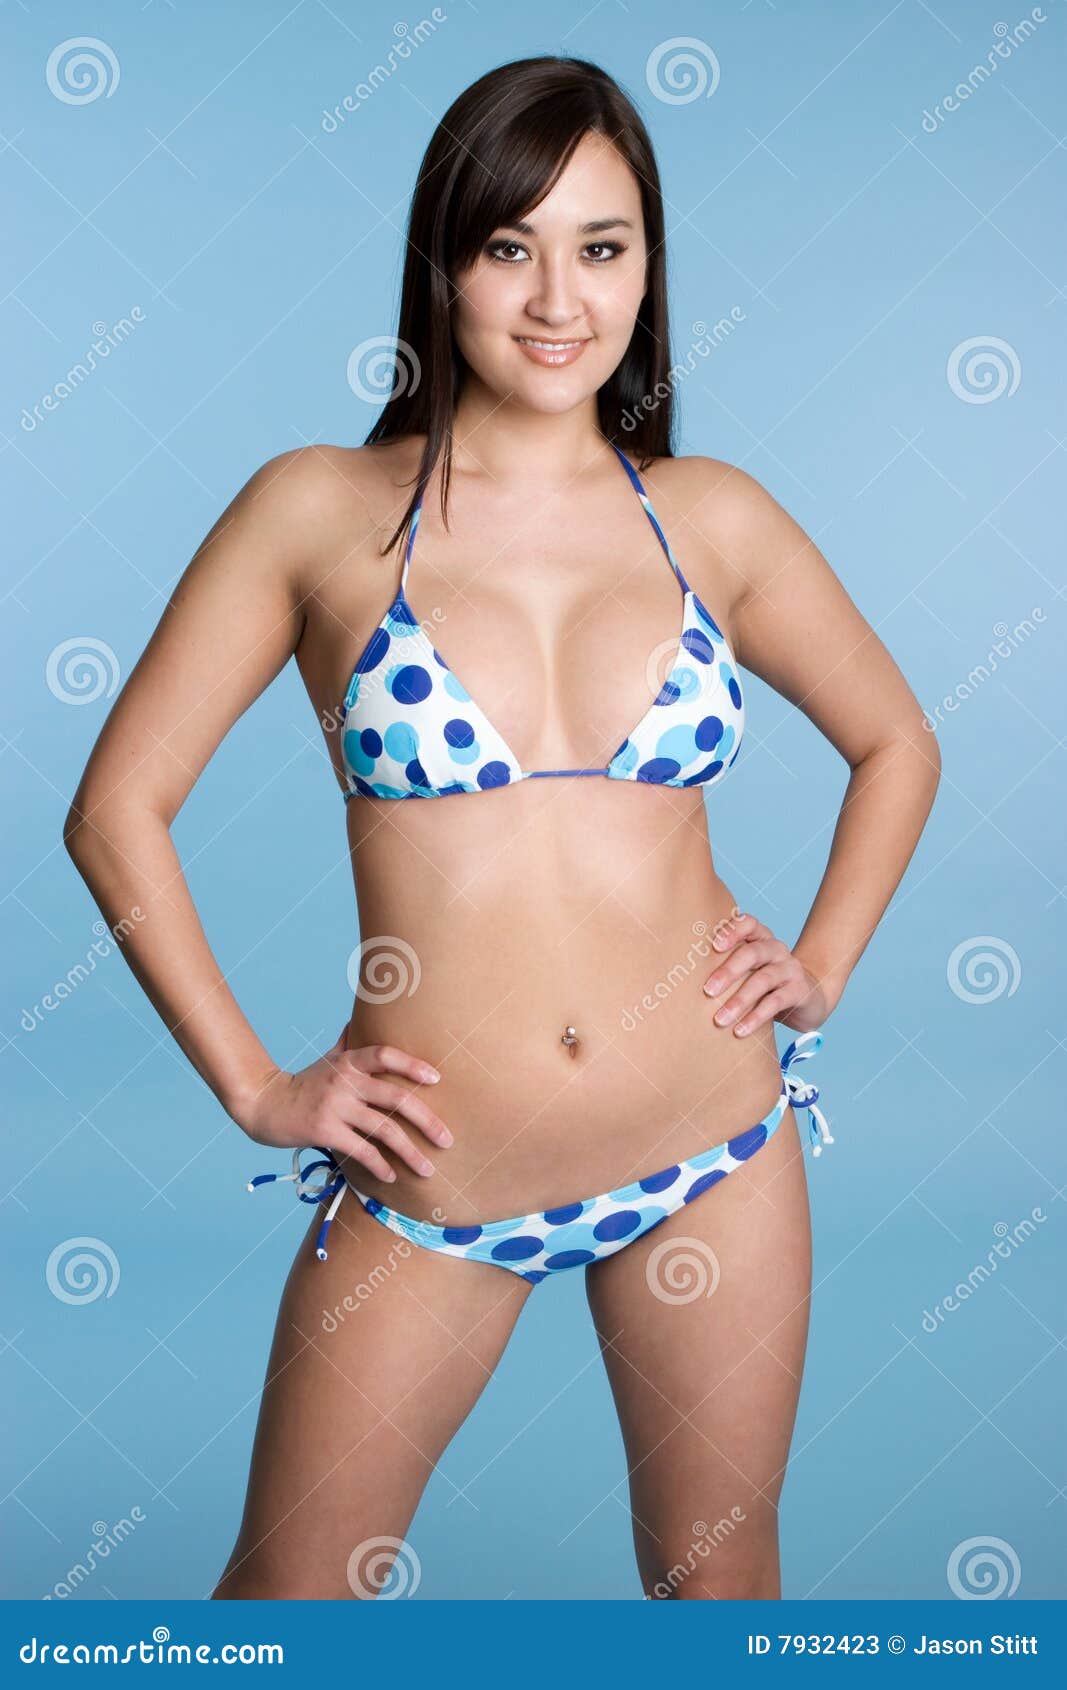 bikini girl japanese photo hd porn pic